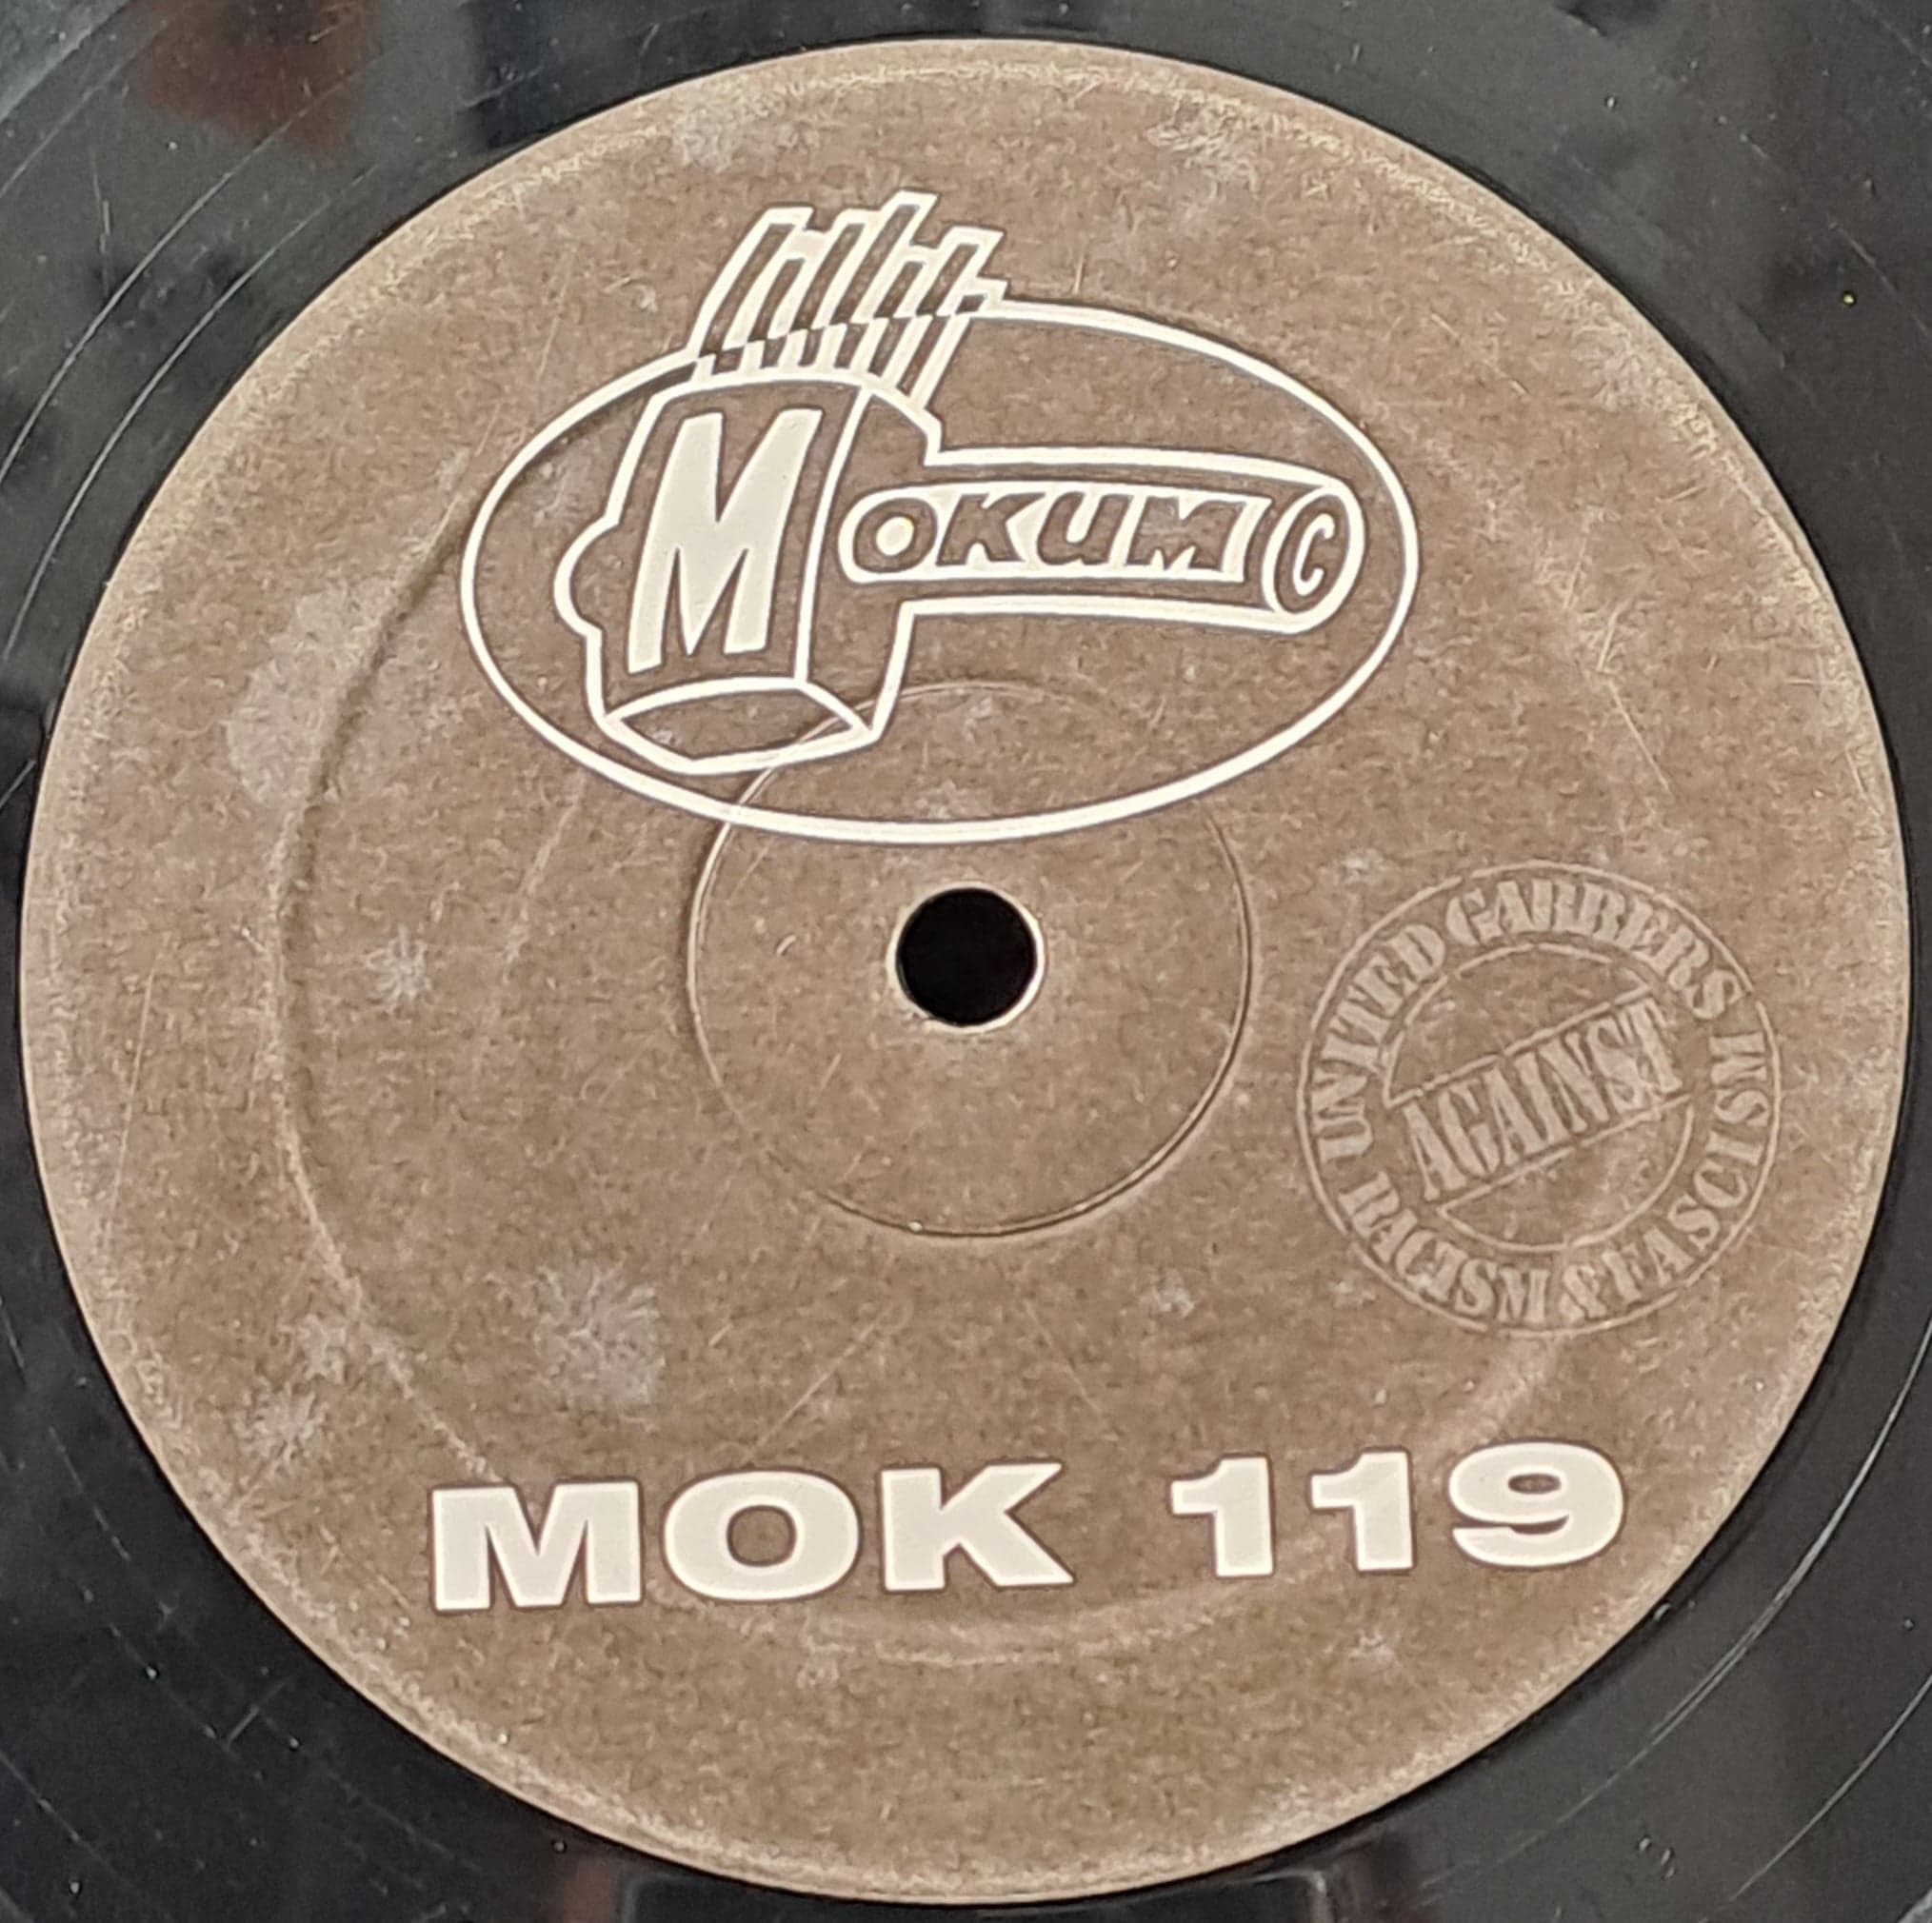 Mokum 119 - vinyle hardcore